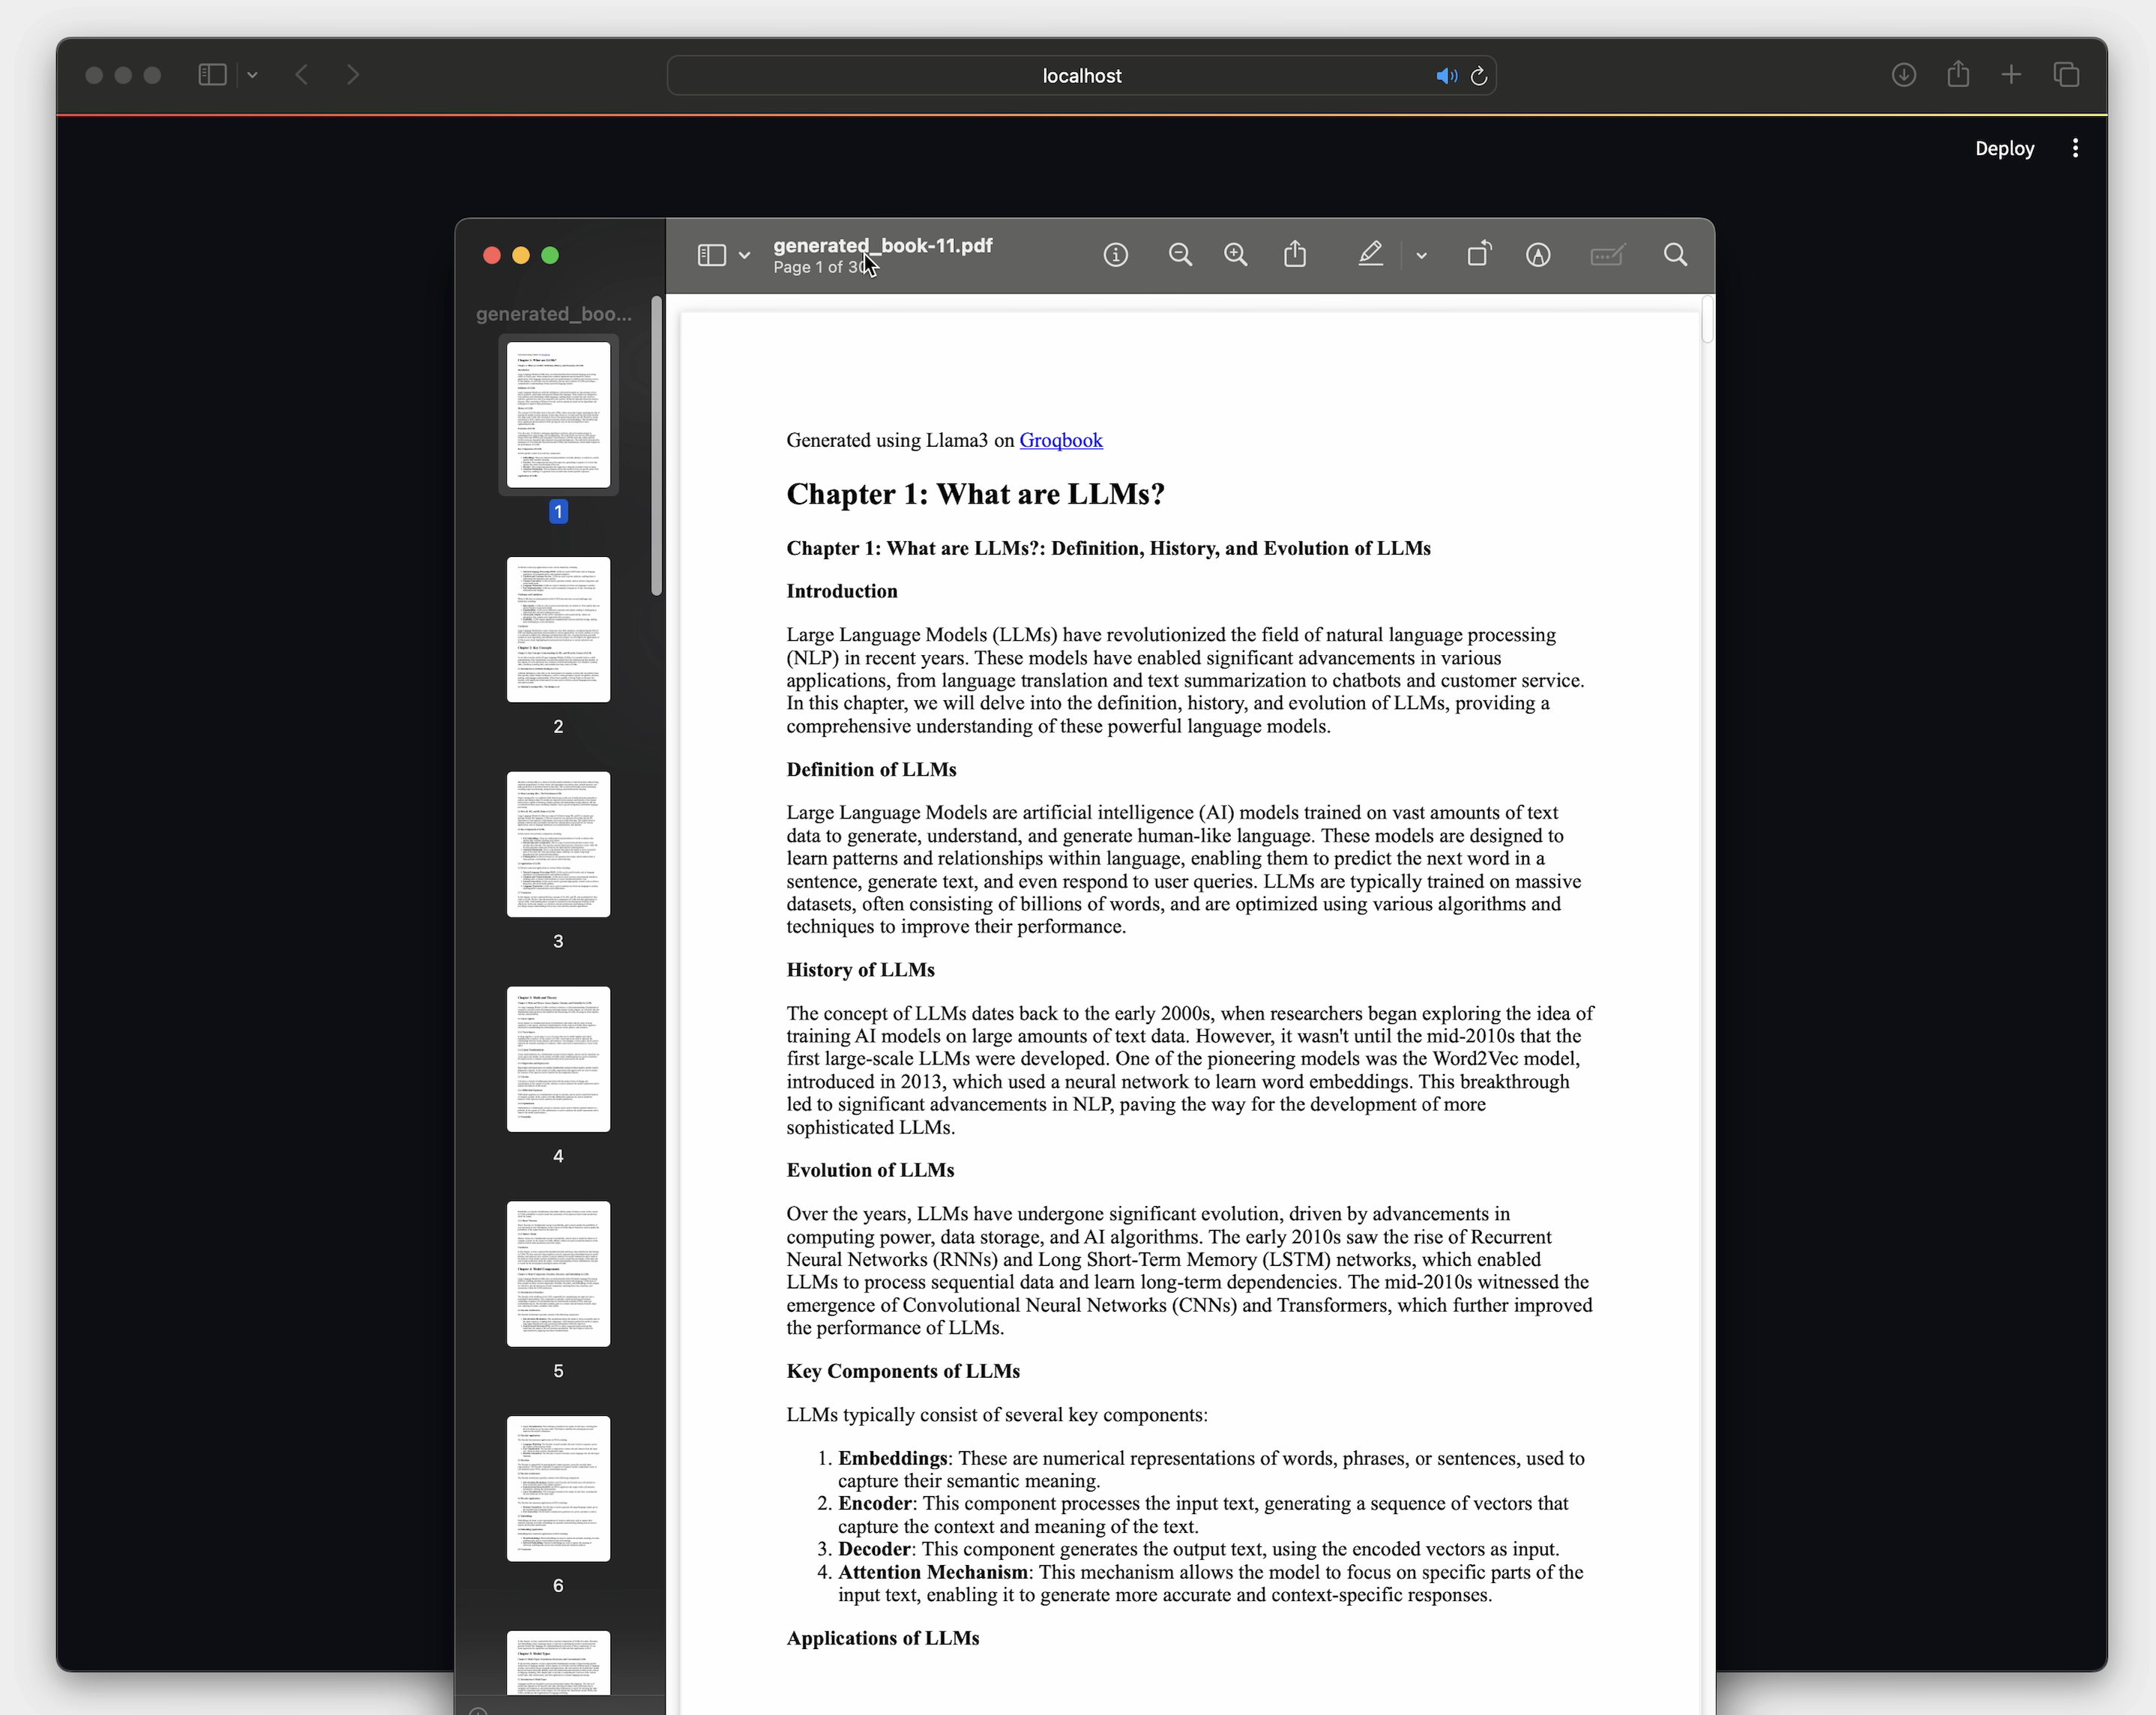 Image of New PDF Download Option